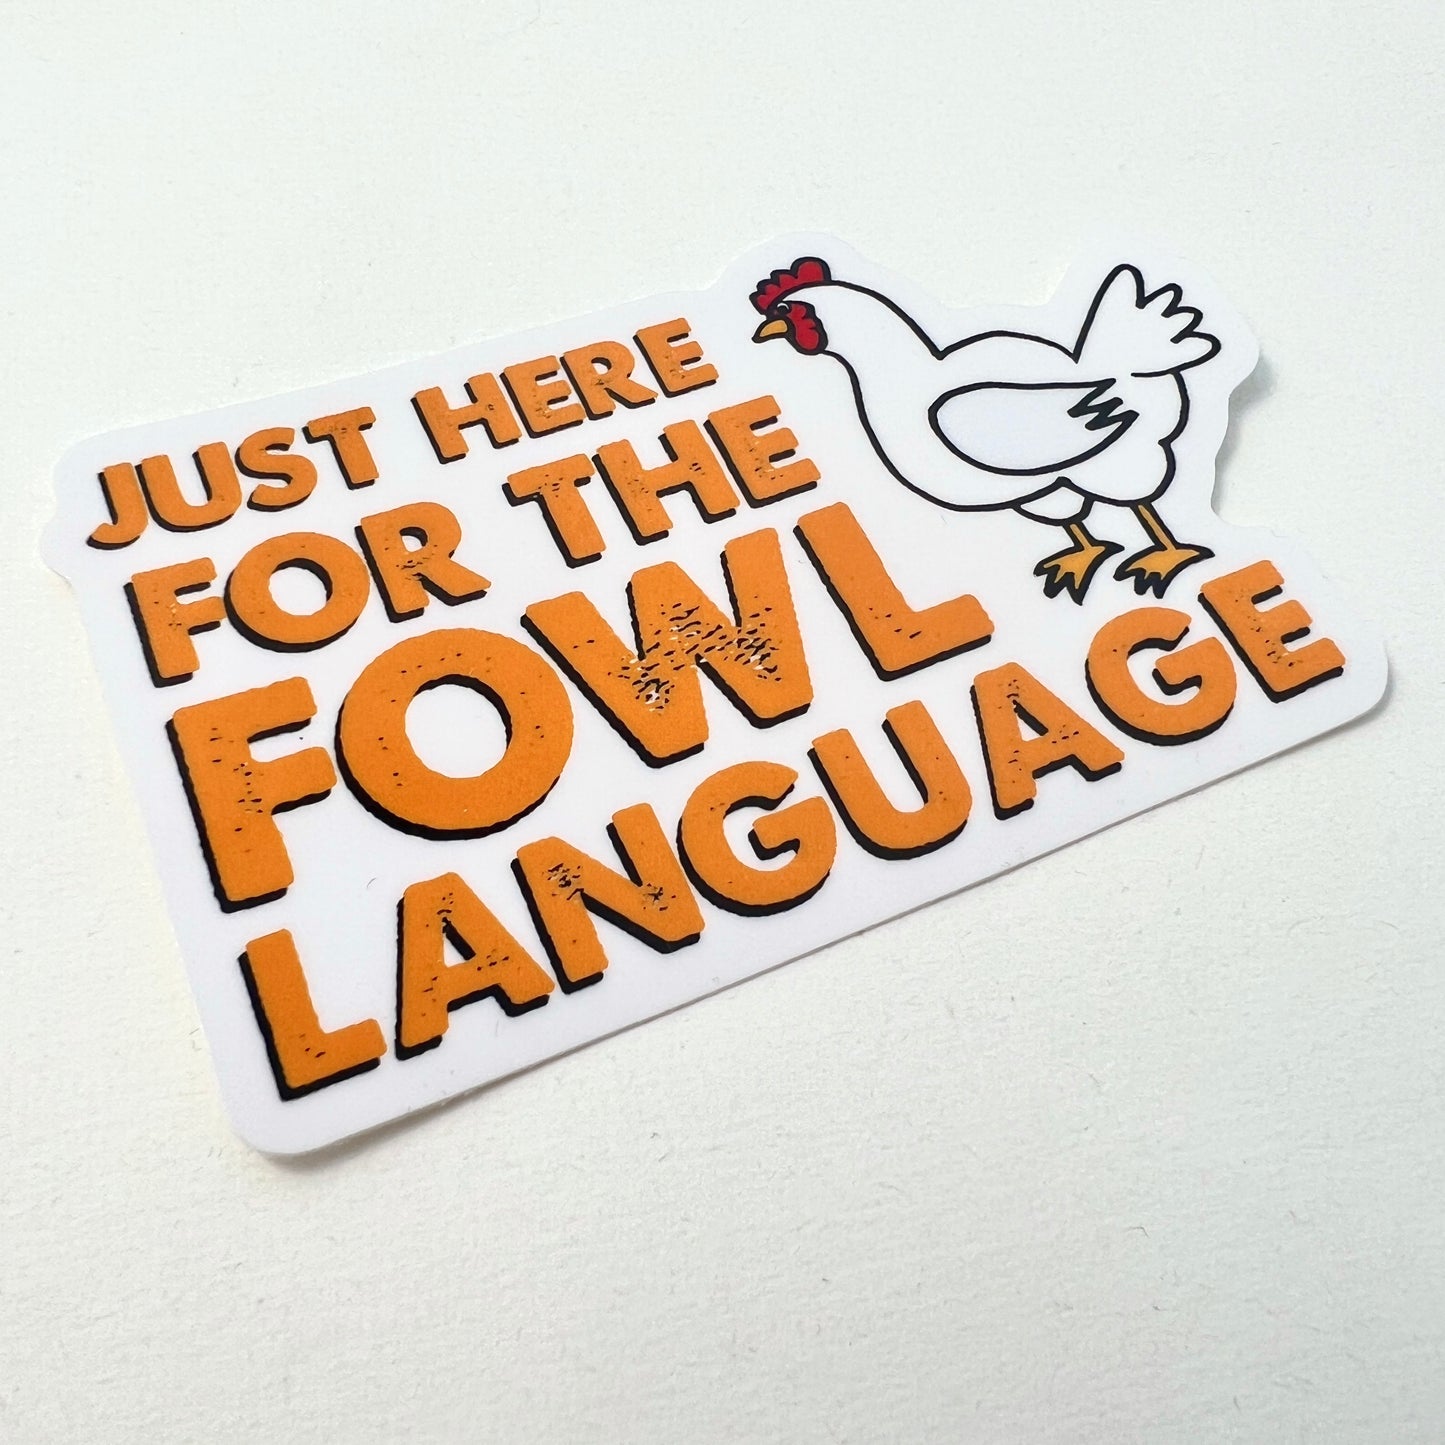 Fowl Language vinyl sticker